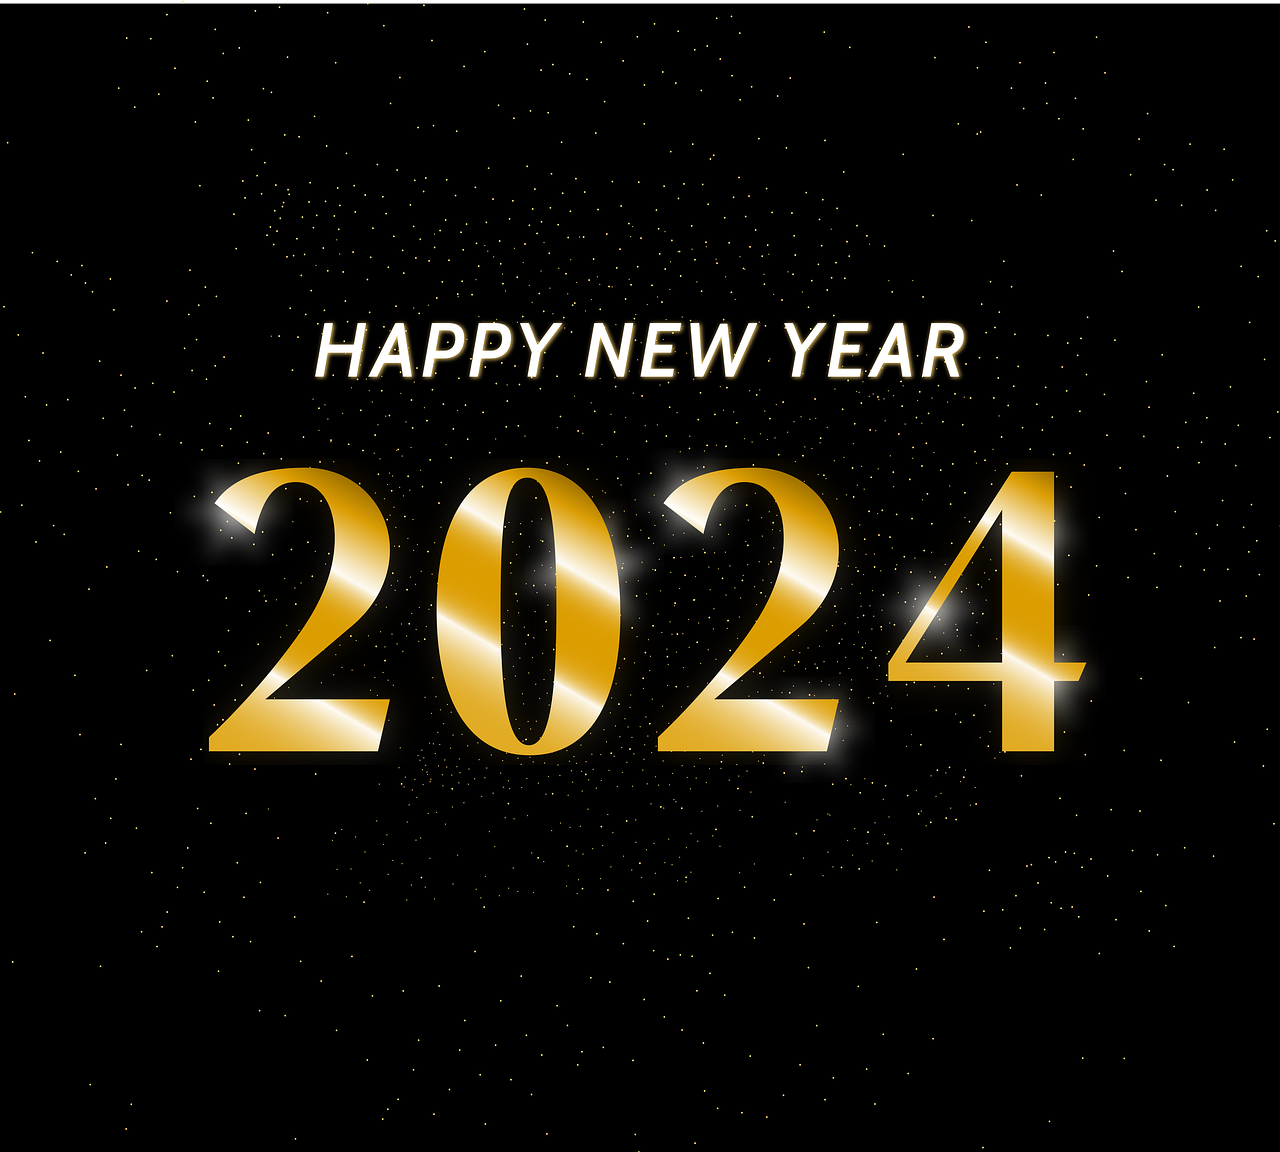 Free Happy New Year 2024 & 2024 Image